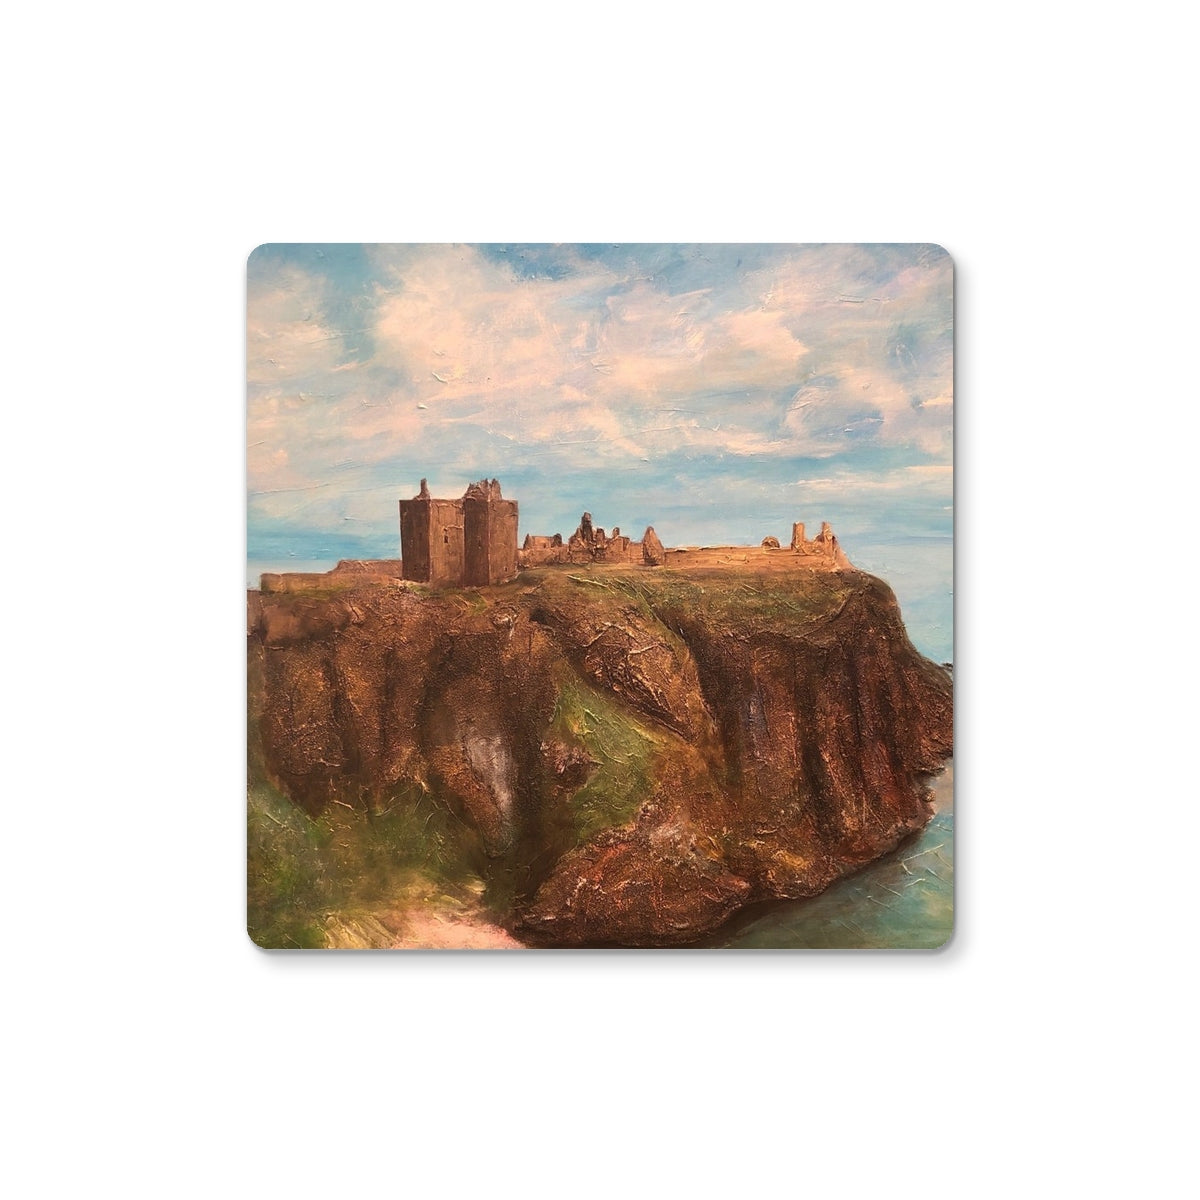 Dunnottar Castle Art Gifts Coaster-Homeware-Prodigi-2 Coasters-Paintings, Prints, Homeware, Art Gifts From Scotland By Scottish Artist Kevin Hunter